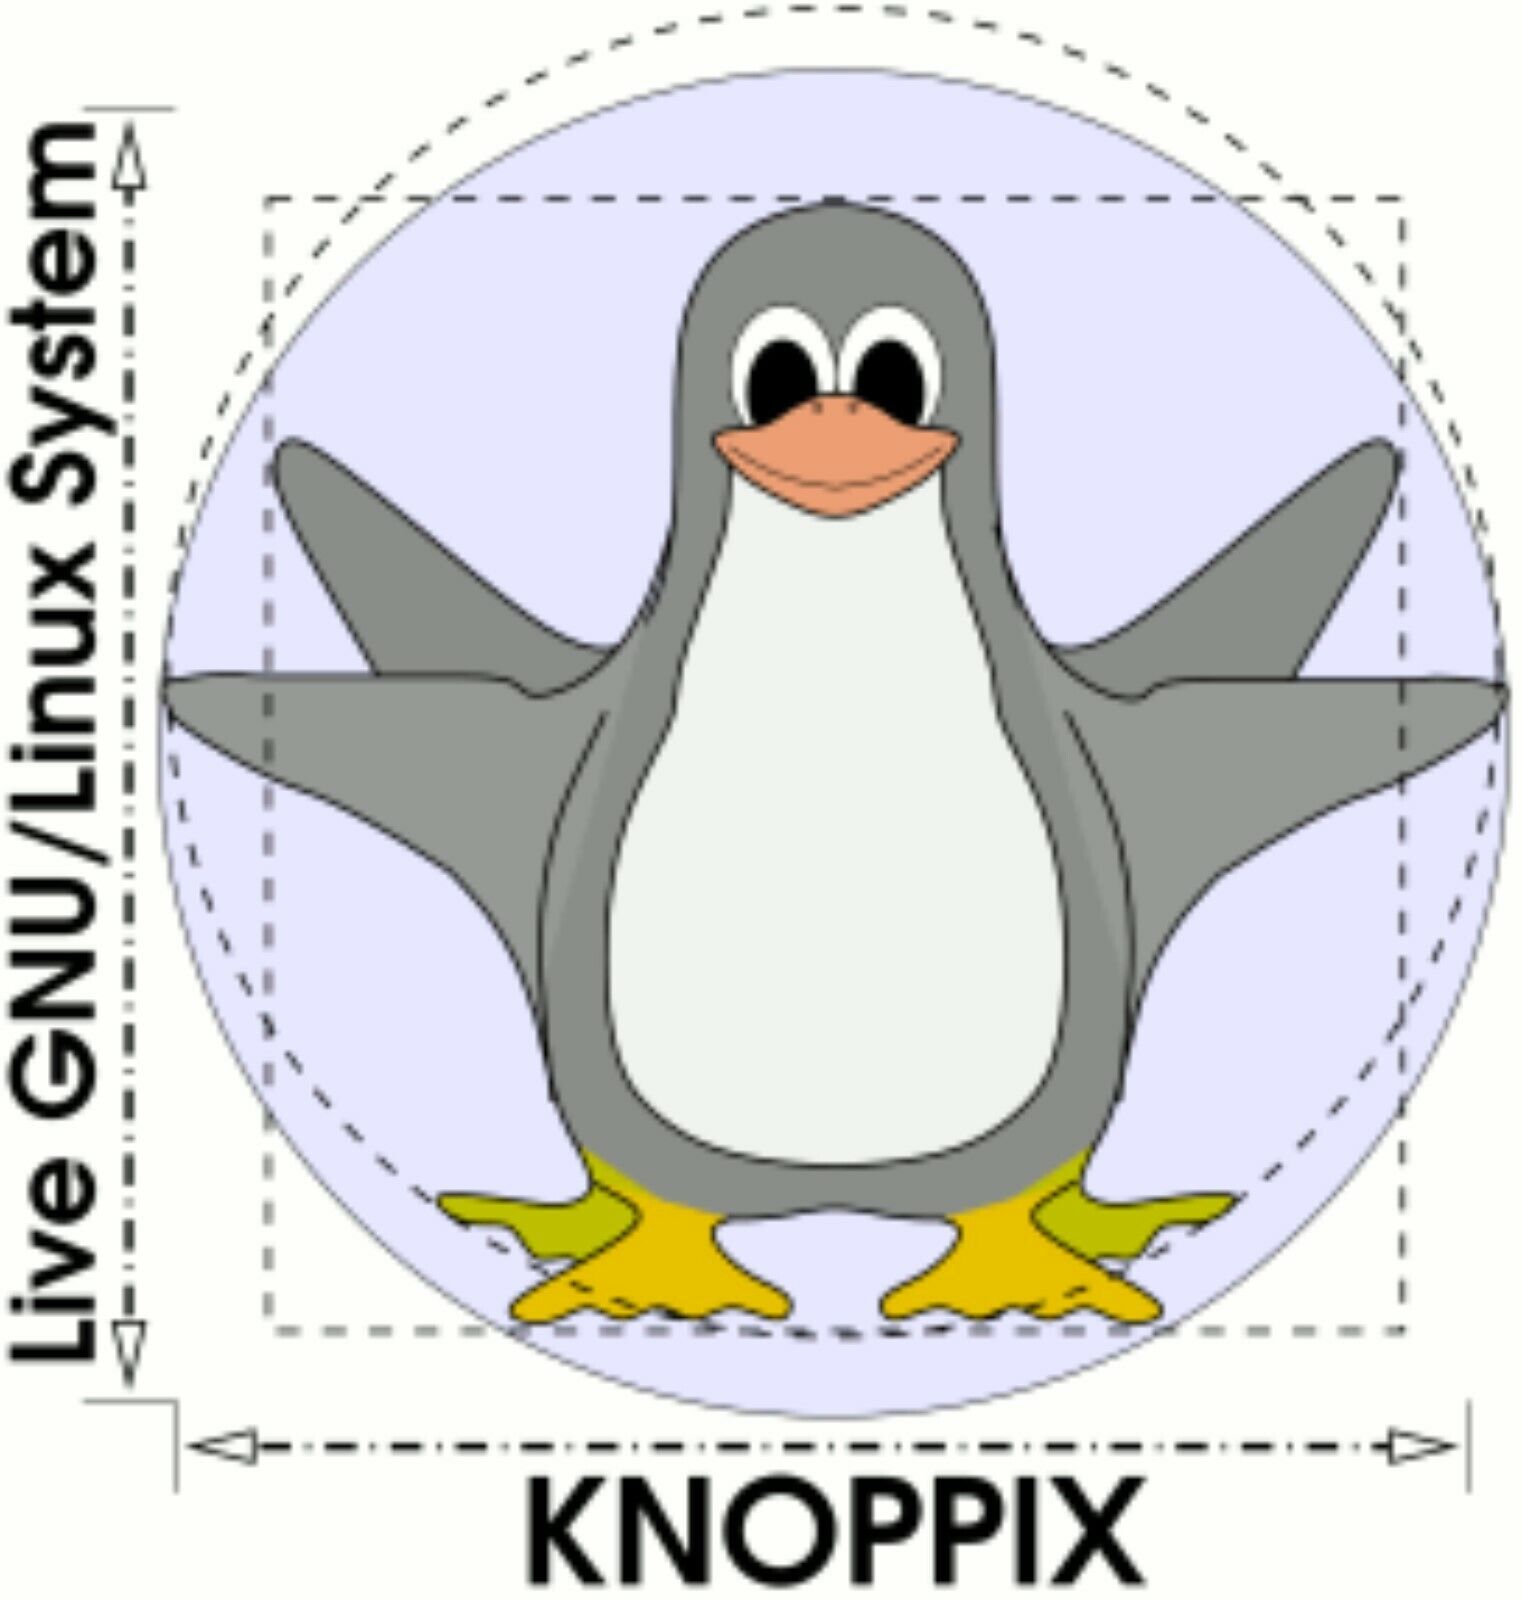 Knoppix Live GNU Linux System 9.1 on Bootable CD / DVD / USB Flash Drive